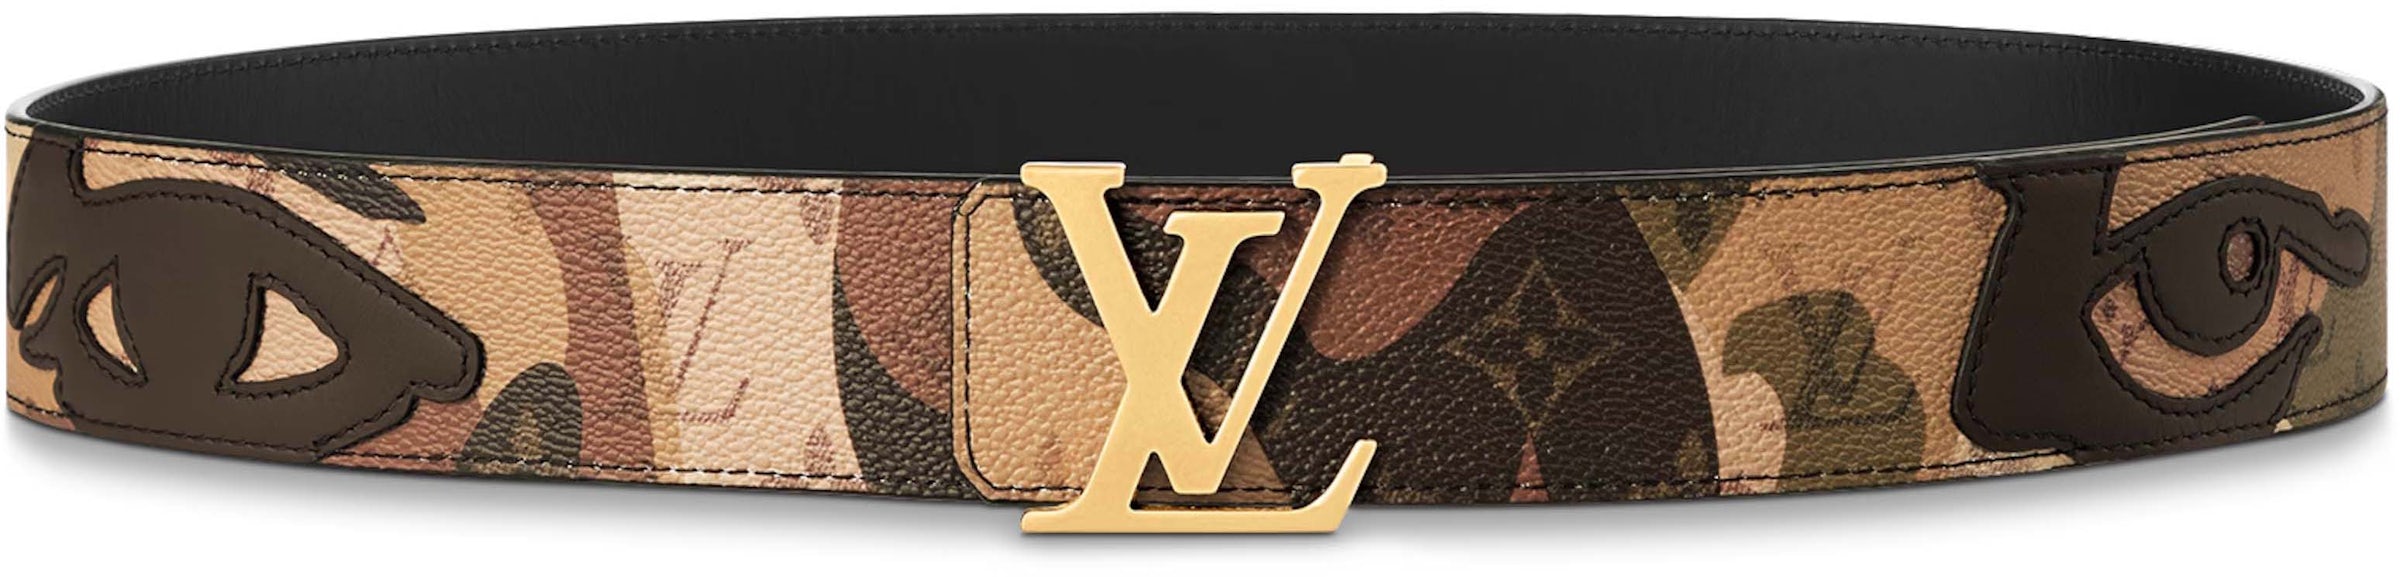 Louis Vuitton Monogram 40mm LV Buckle Wide Belt Brown 100